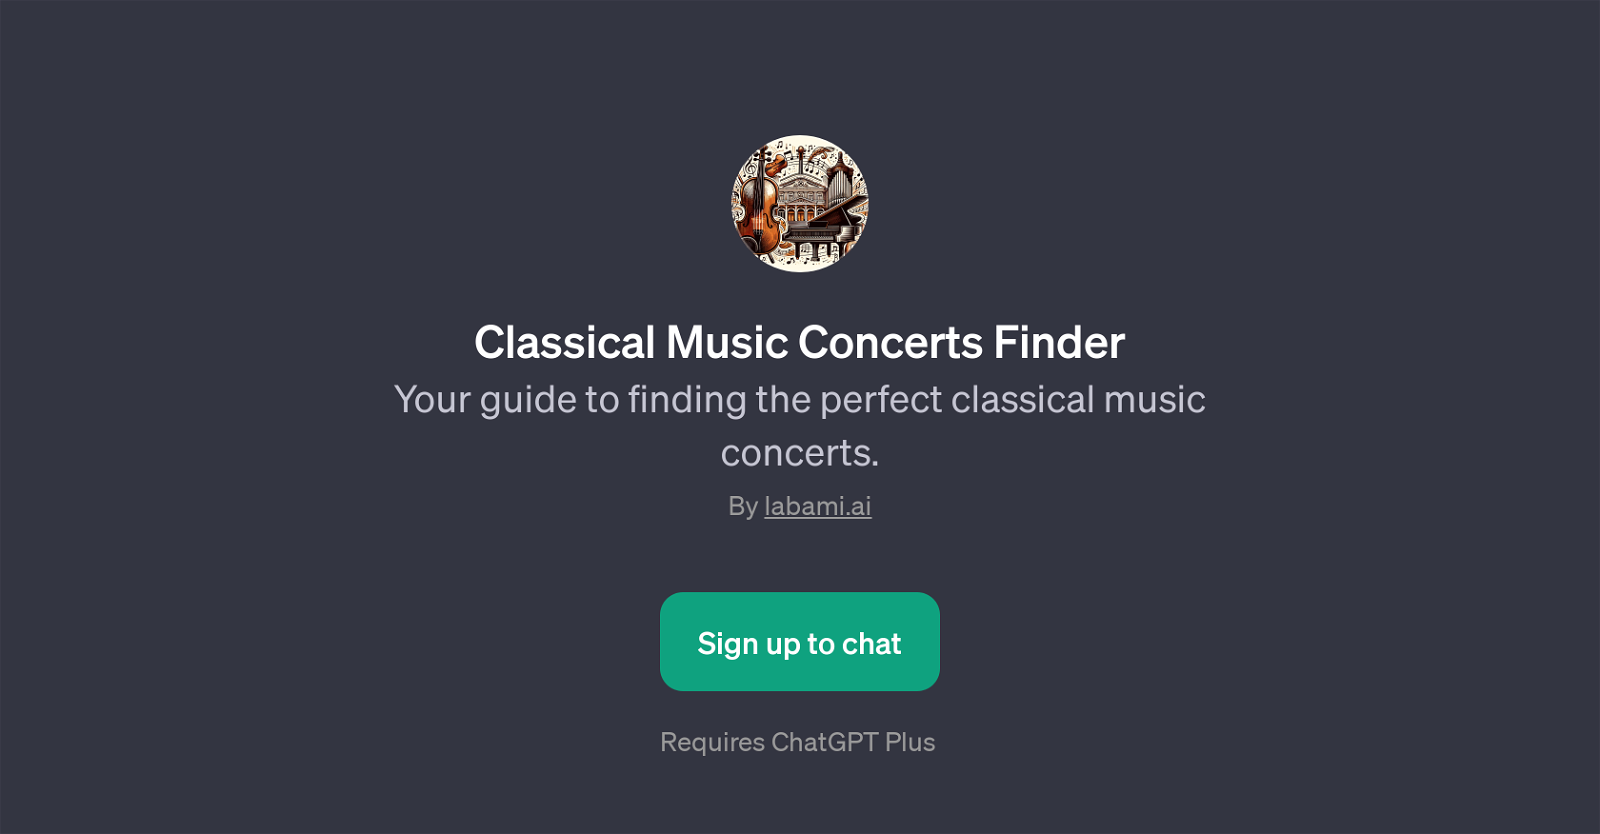 Classical Music Concerts Finder website